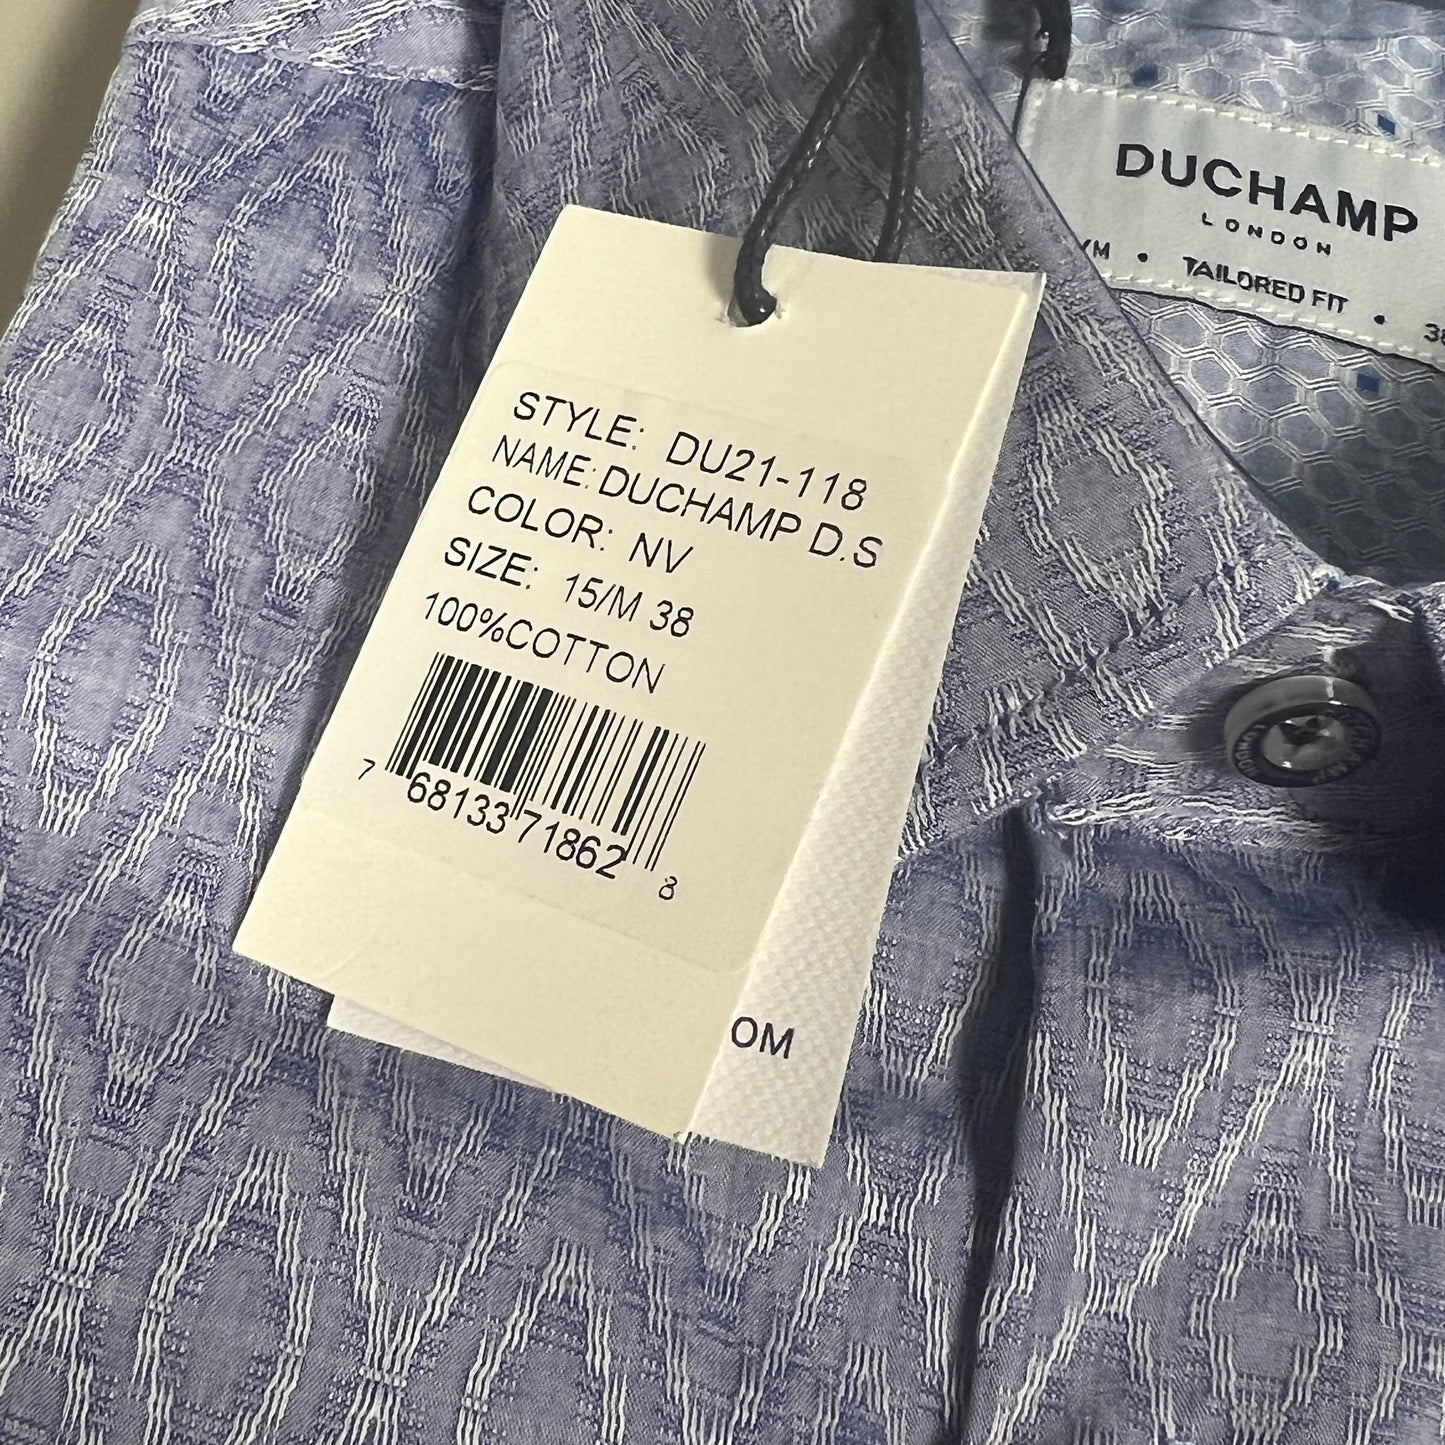 DUCHAMP LONDON Blue Tailored-fit Geometric-print Dress Shirt Men's Sz M/38/15 (New)